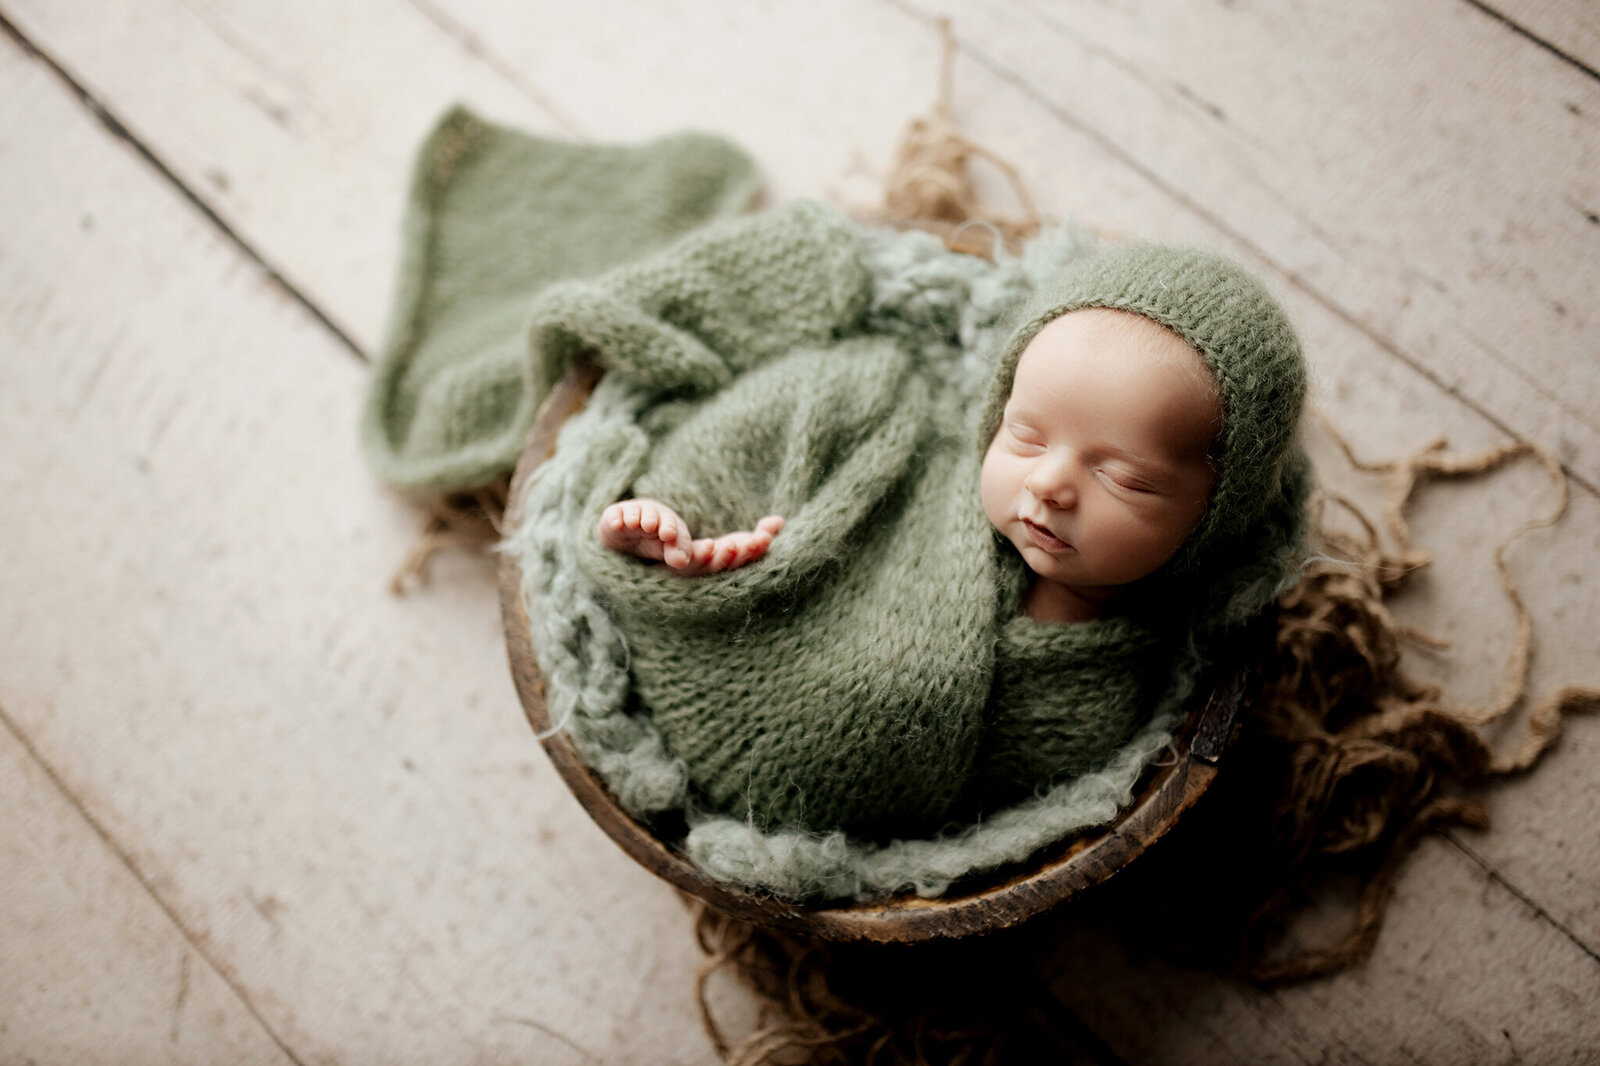 Newborn baby boy in a basket with a green wrap in Lane Weichman Photography studio